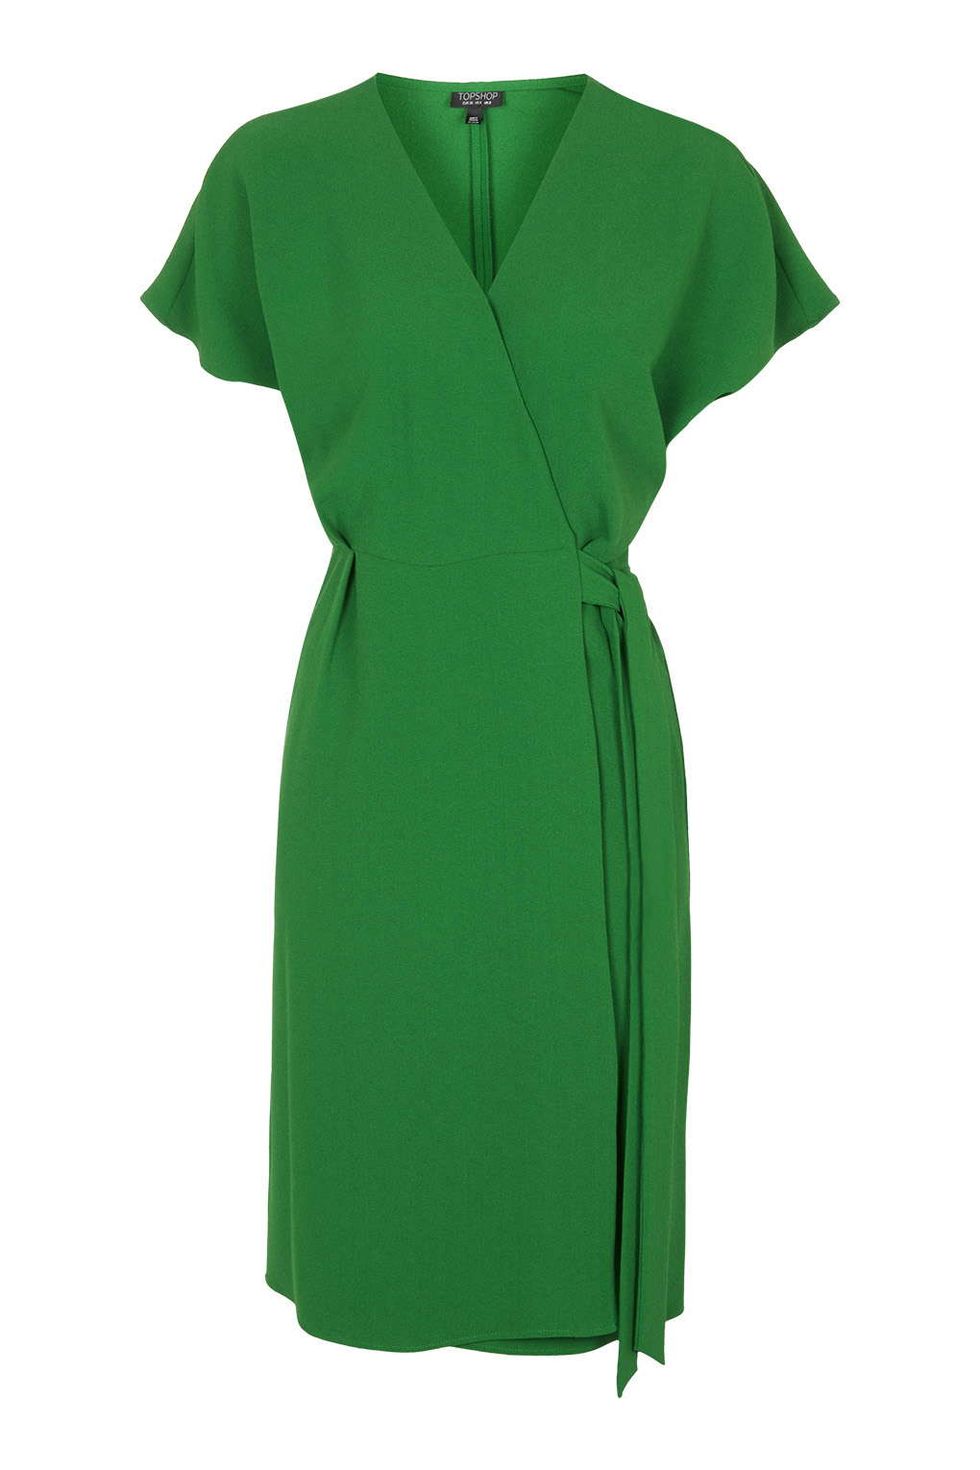 Green, Sleeve, Collar, Textile, Standing, Pattern, Formal wear, Dress, Teal, One-piece garment, 